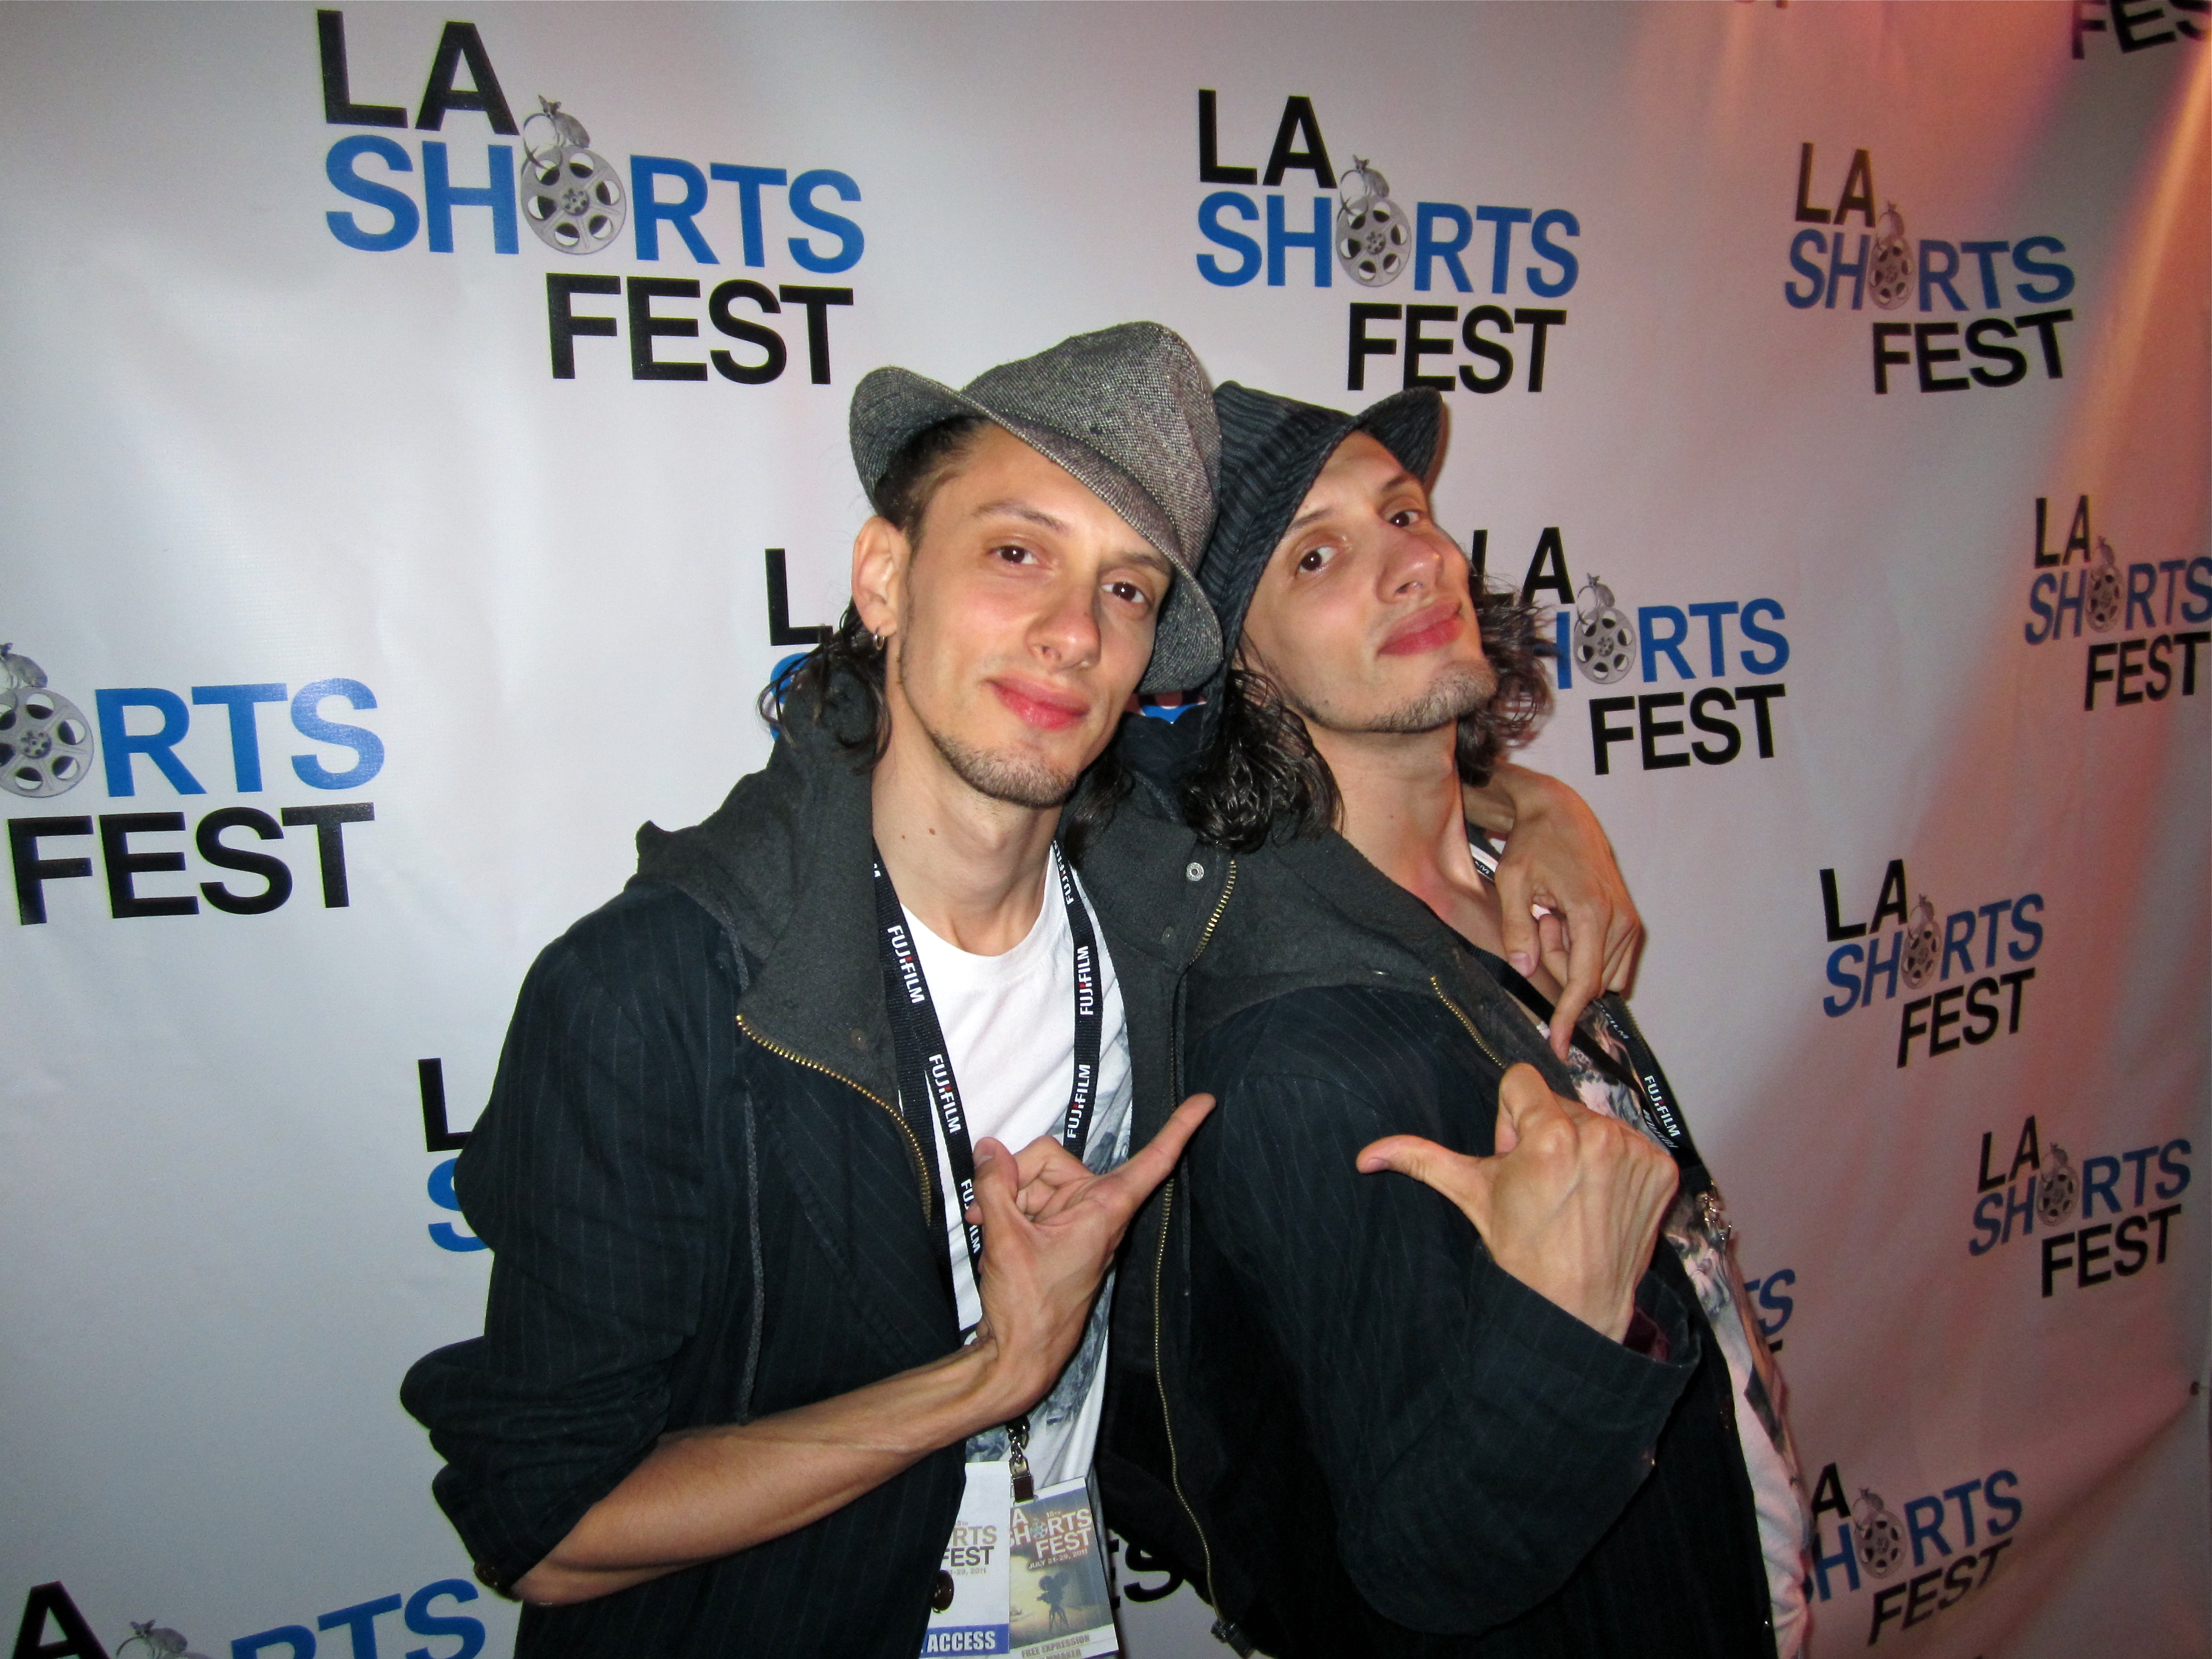 Facundo Lombard and Martín Lombard at LA Shorts Fest 2011